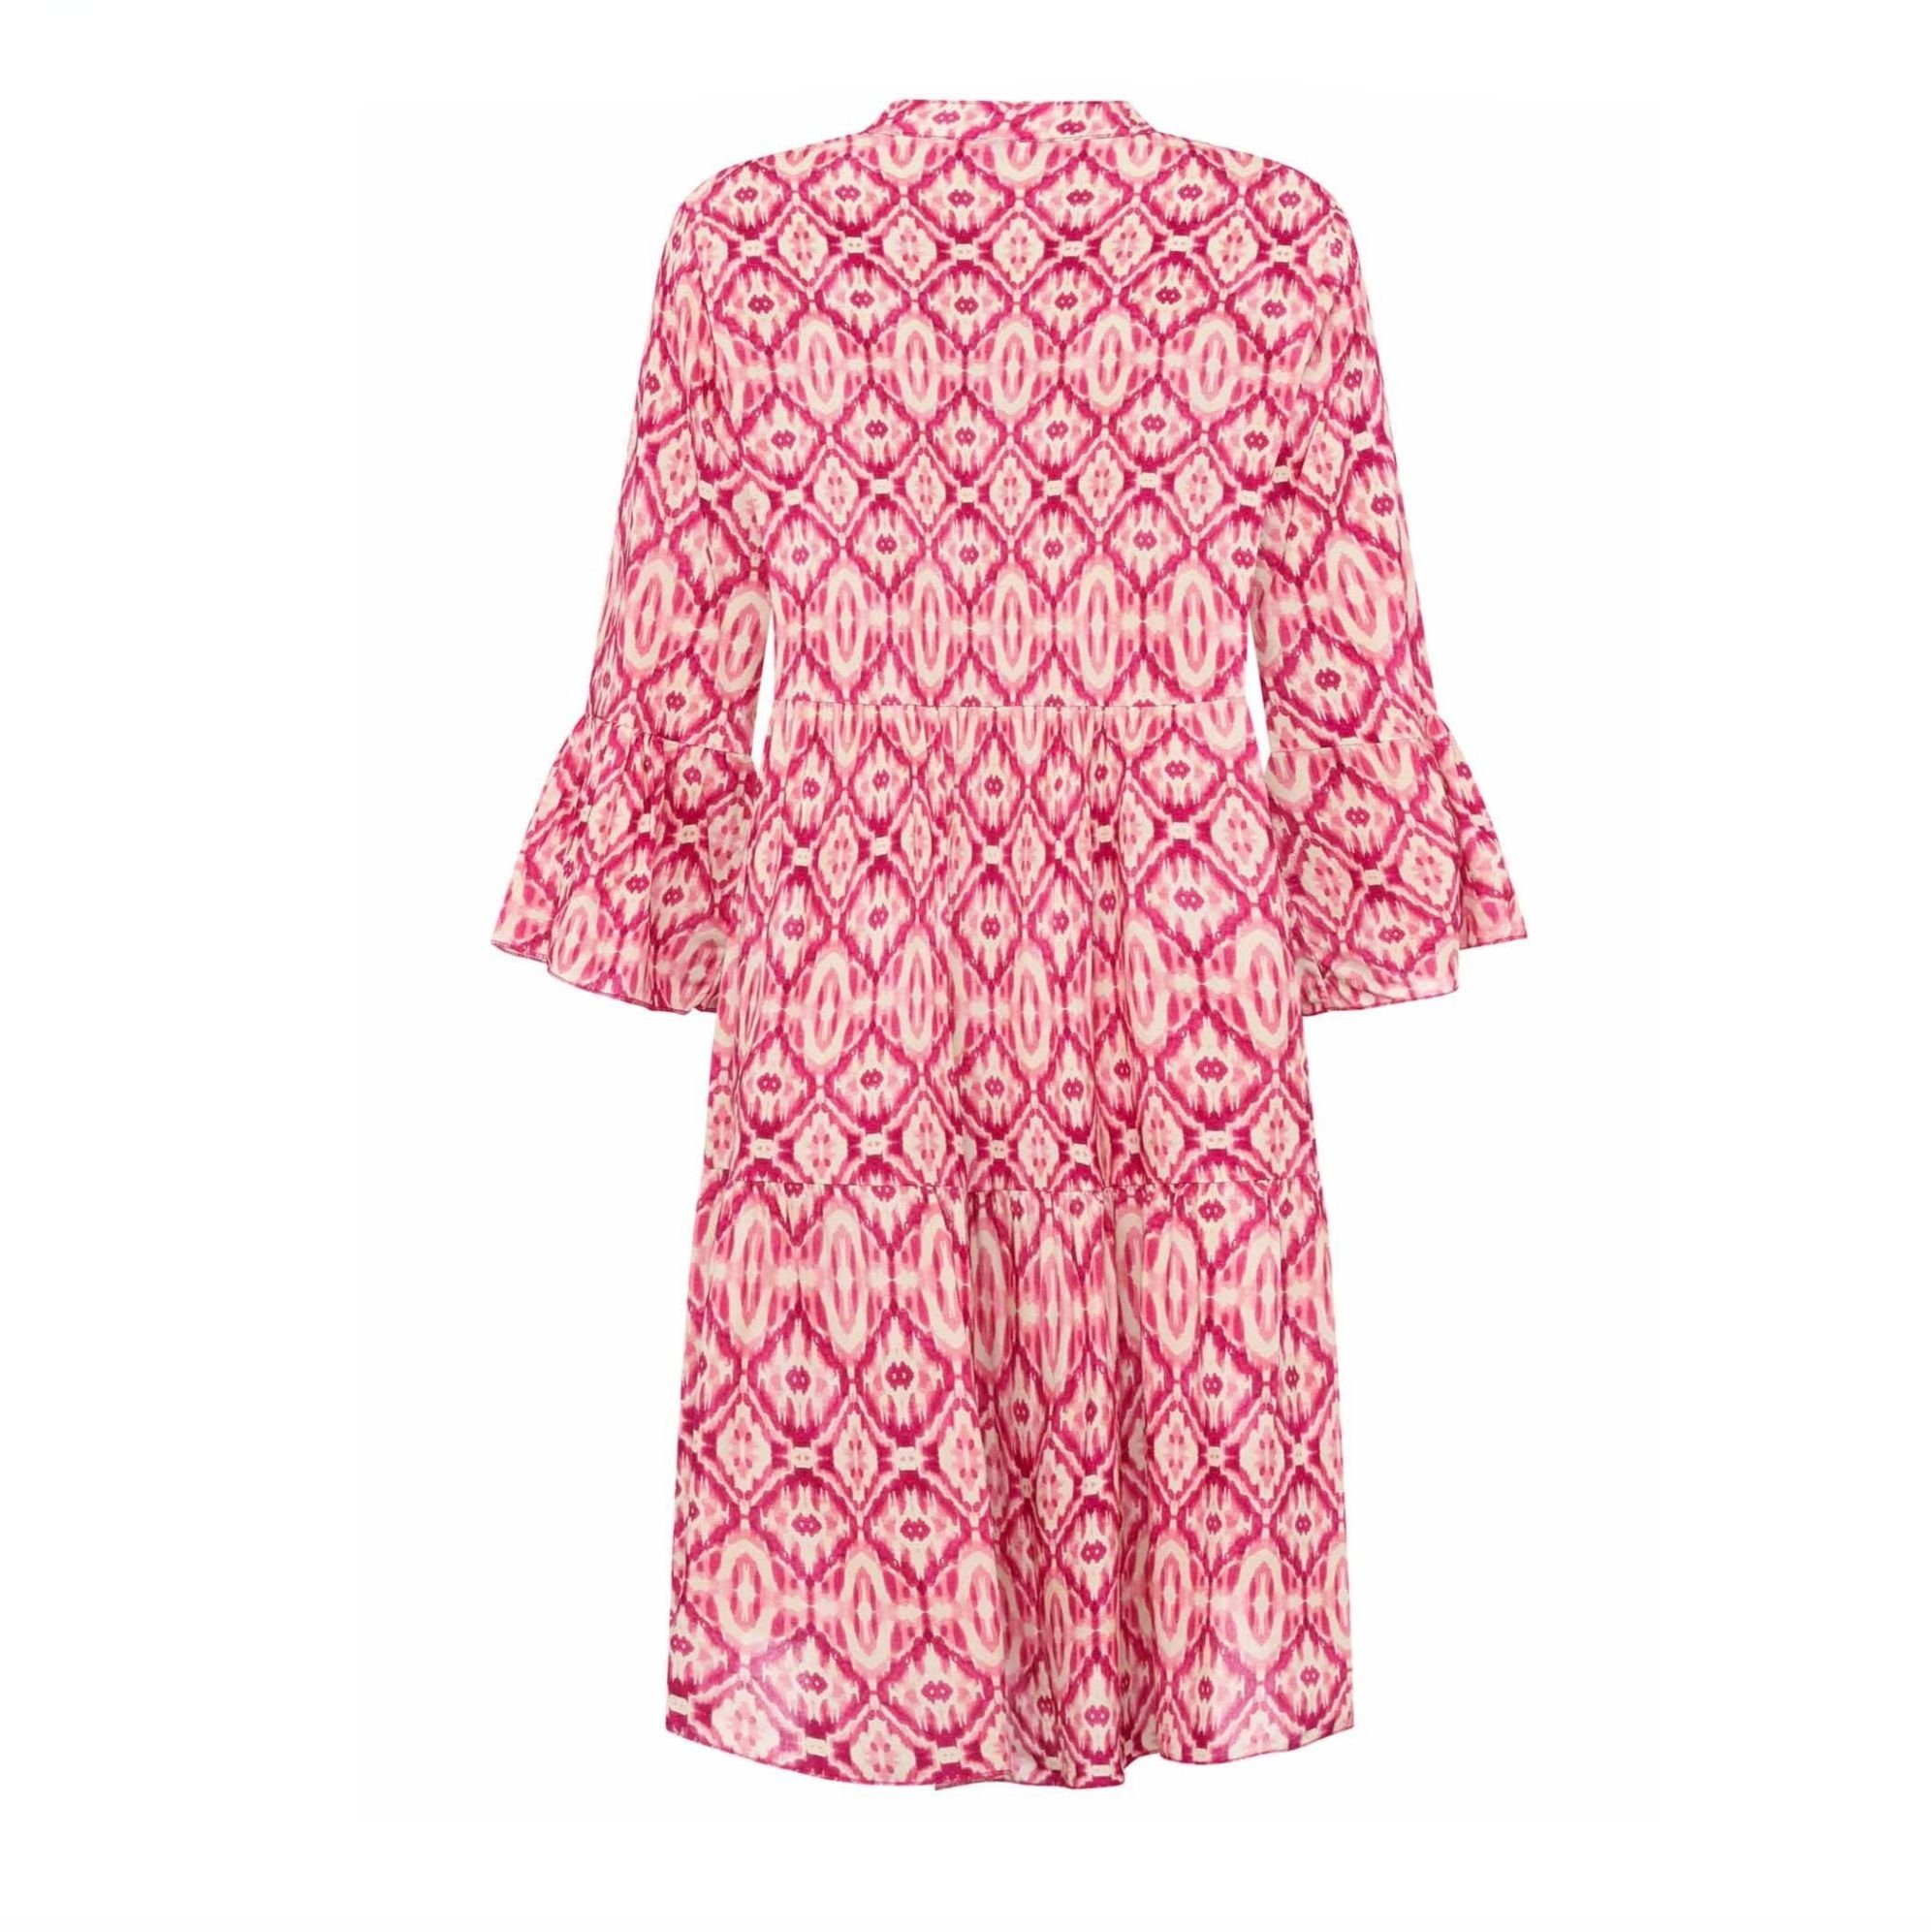 Farbe Toskana pink-pink oder blau pink Kleid Sommerkleid Zwillingsherz